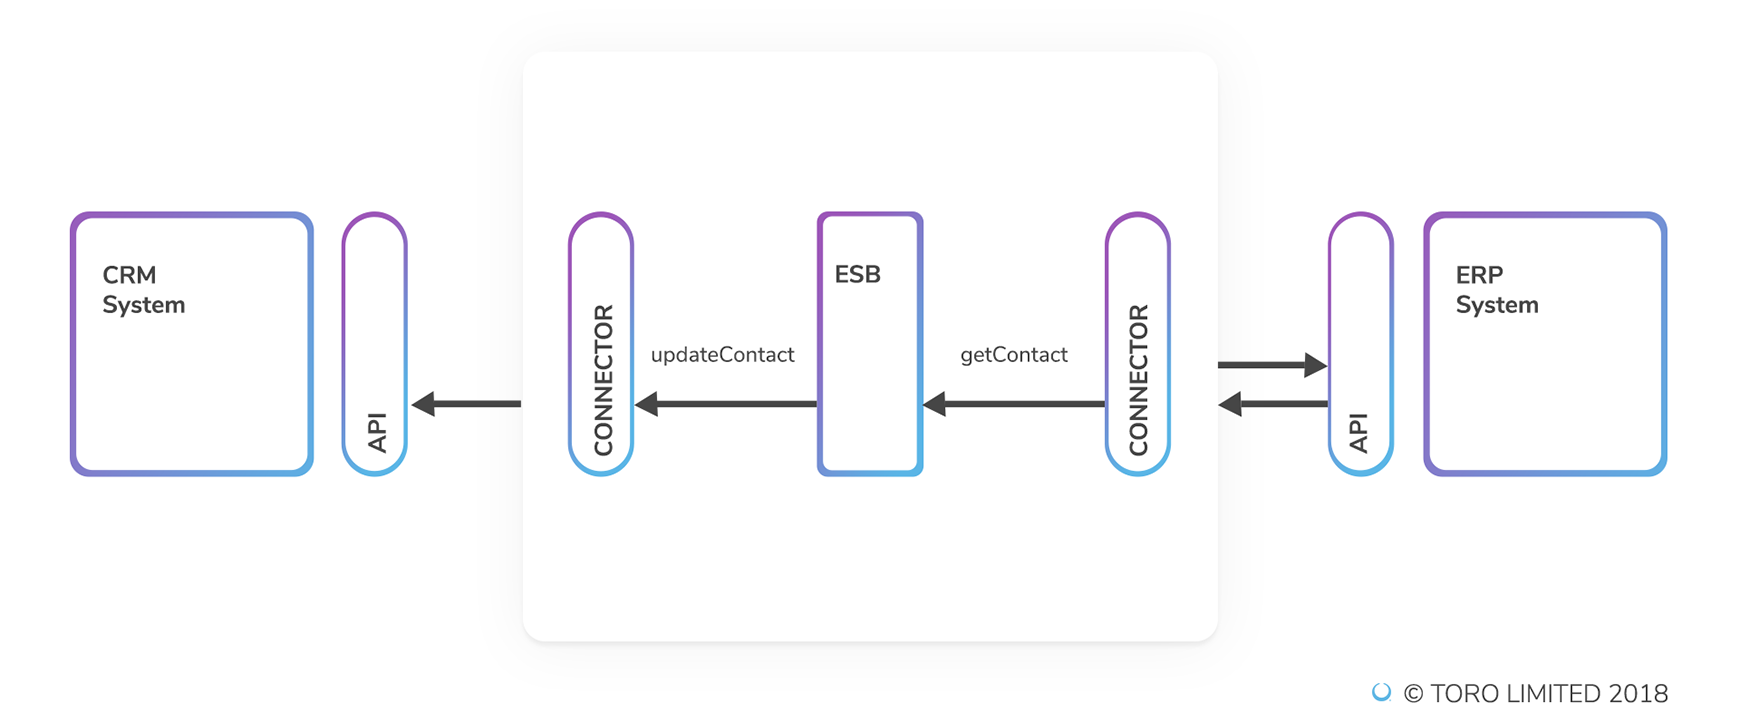 Enterprise Application Integration Connector